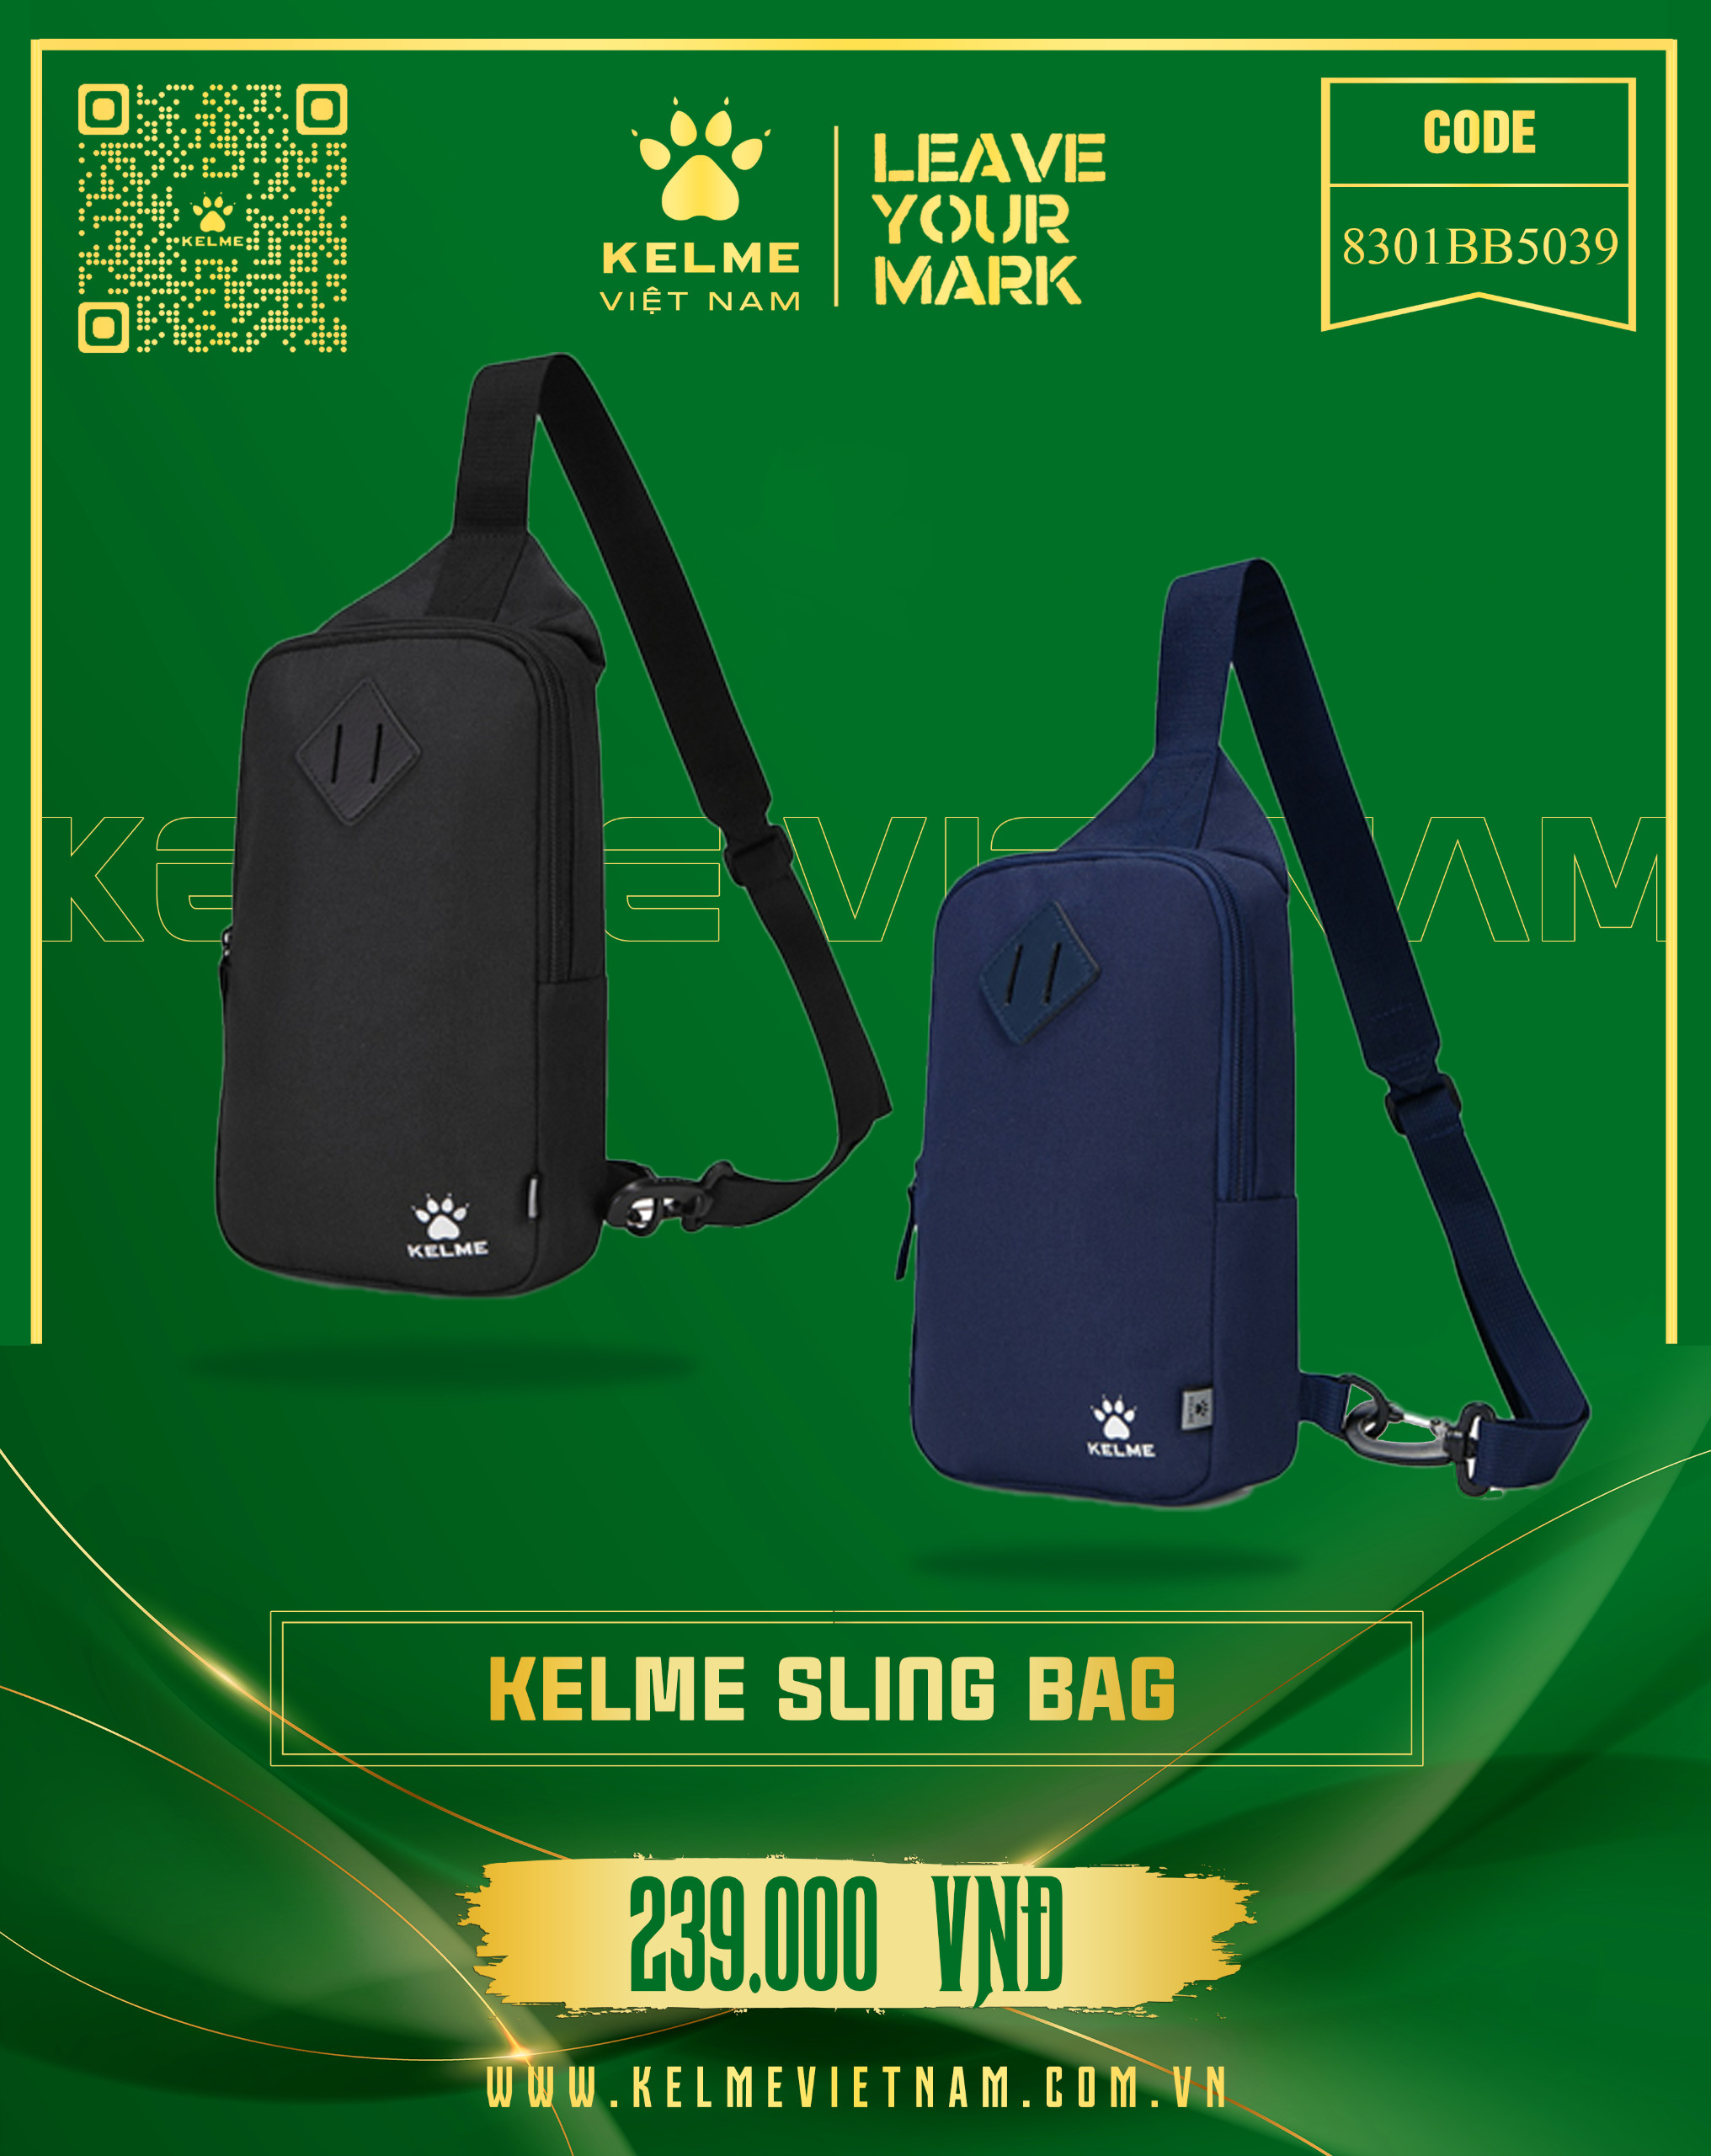 KELME SLING BAG 8301BB5039